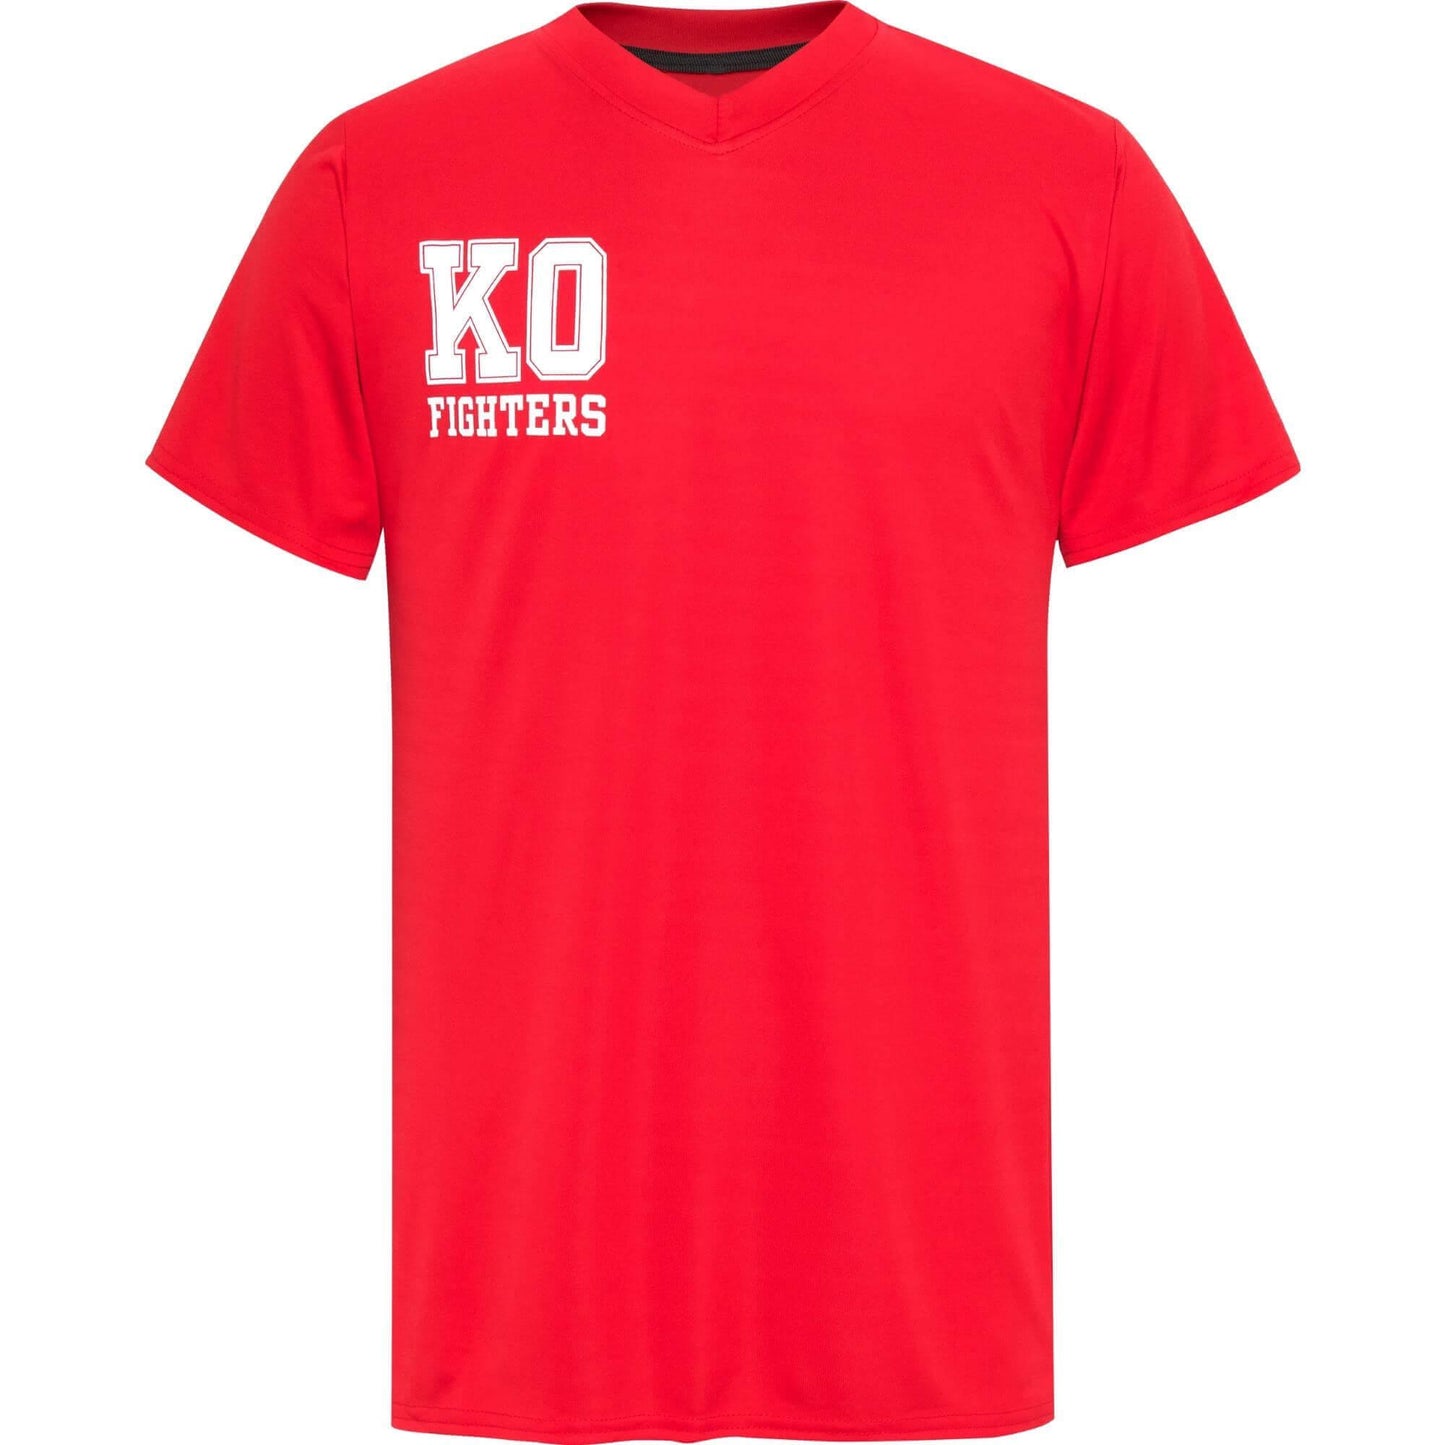 T shirt Rood - kofighters